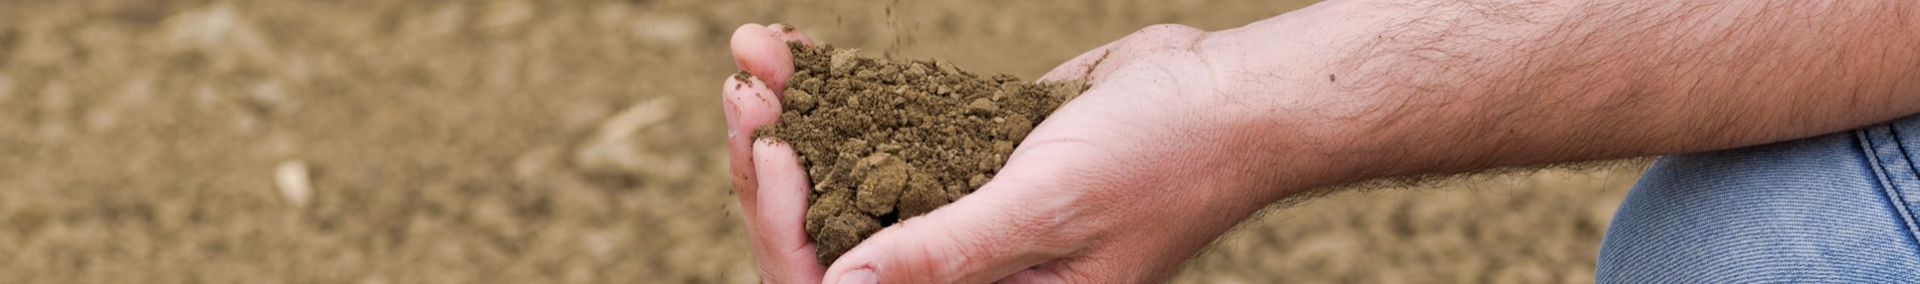 Image of retailer testing soil quality